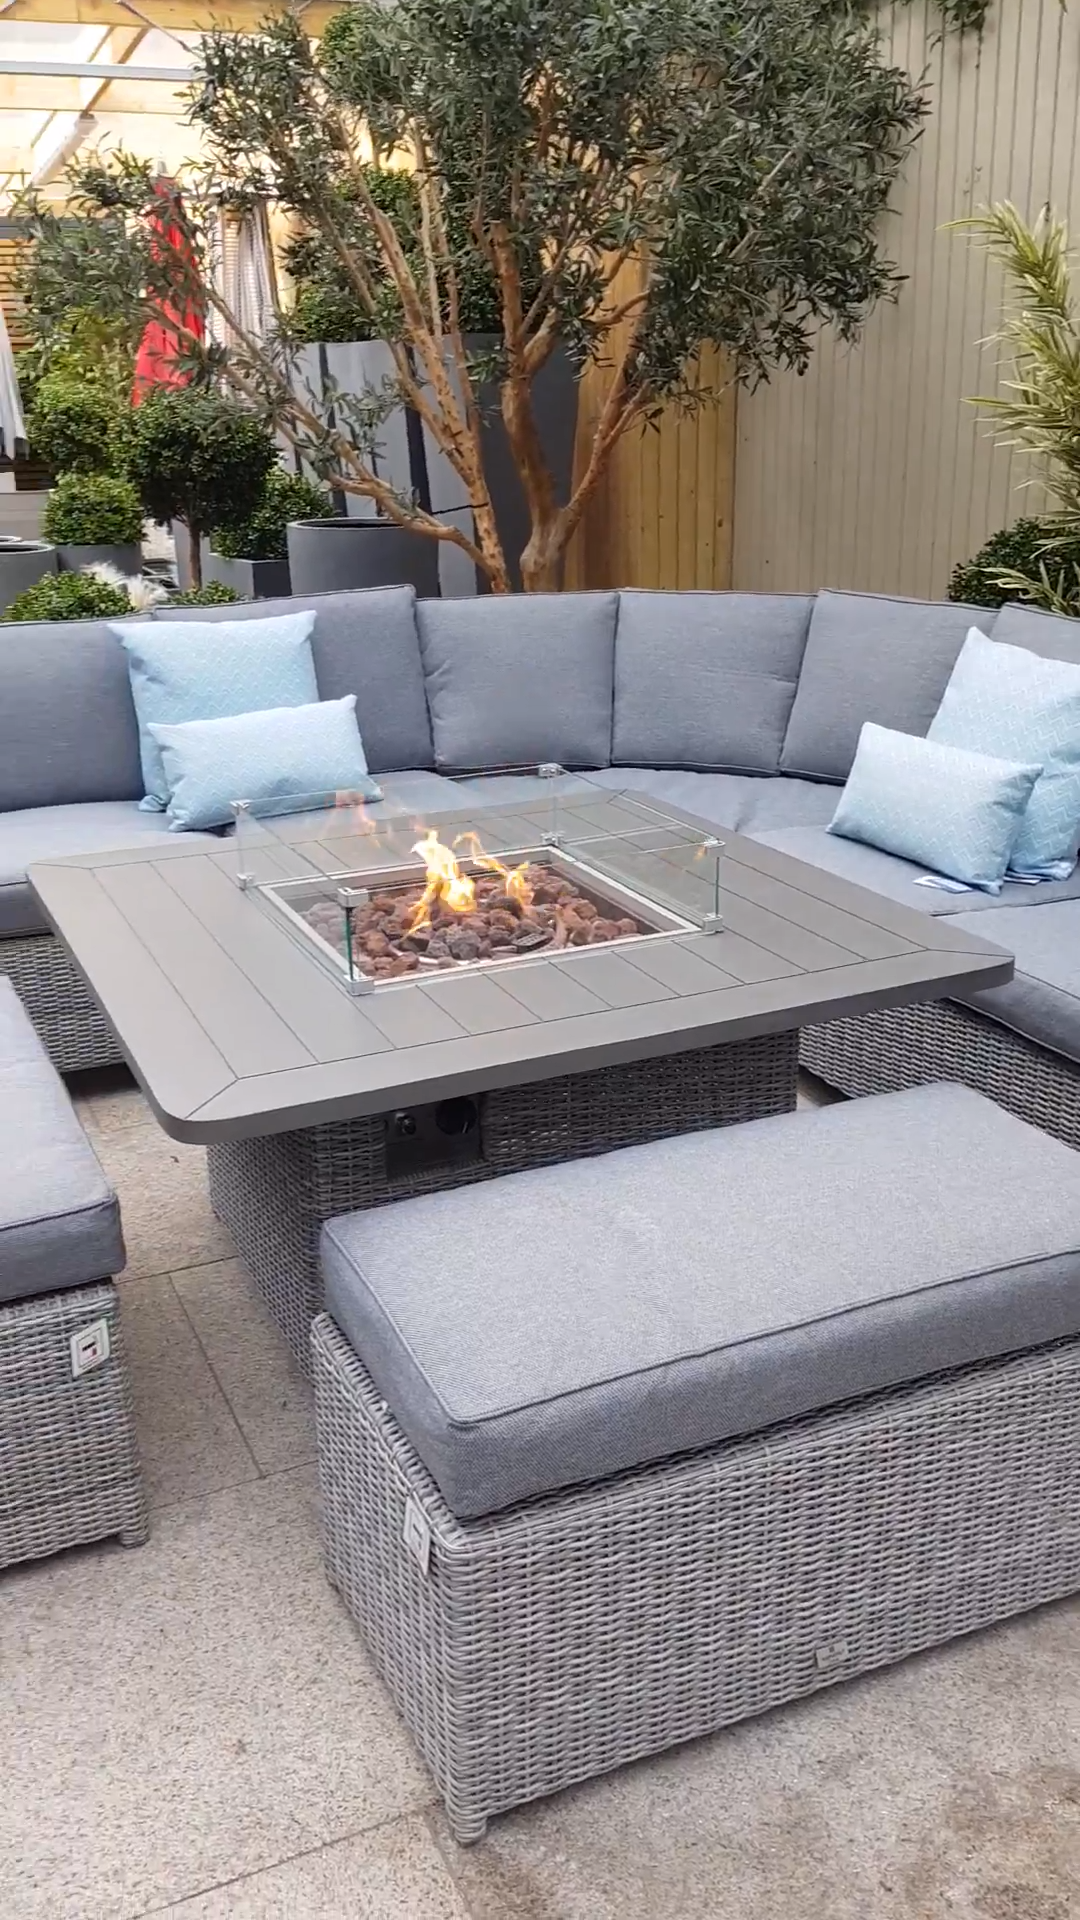 Garden furniture with fire pit – decorafit.com/home